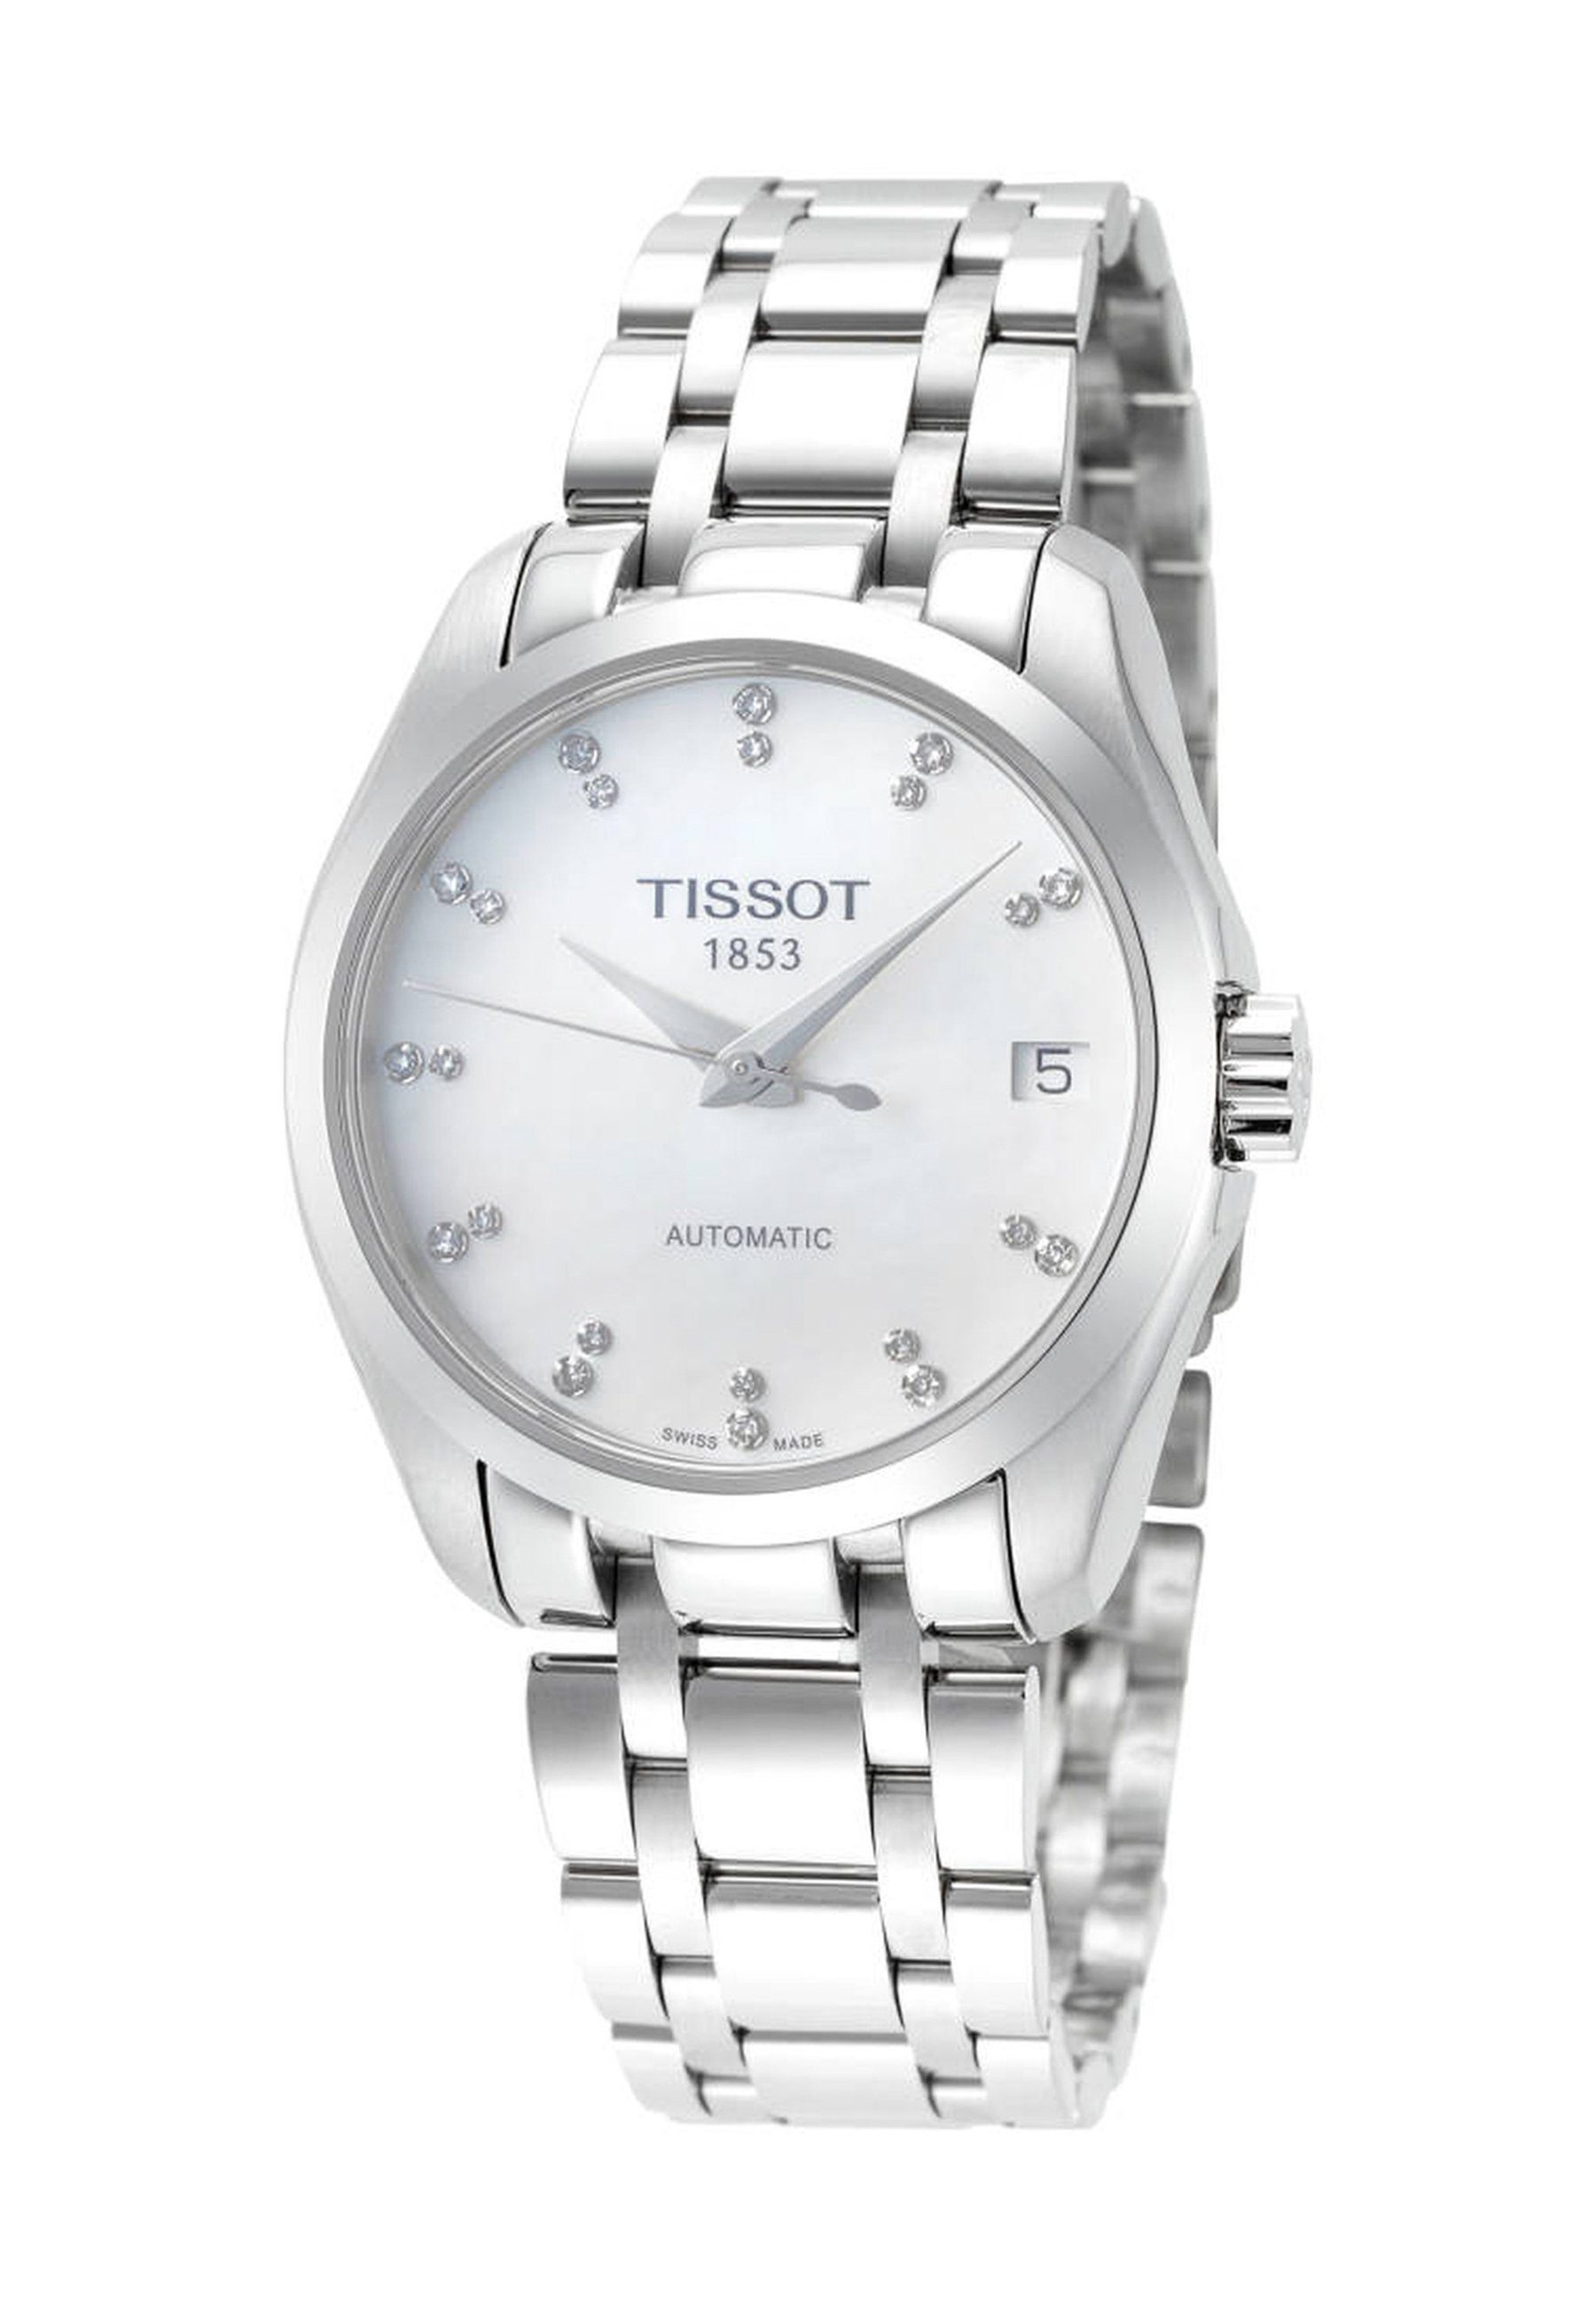 【Auffüllen】 Tissot Automatikuhr Tissot Armband Uhr